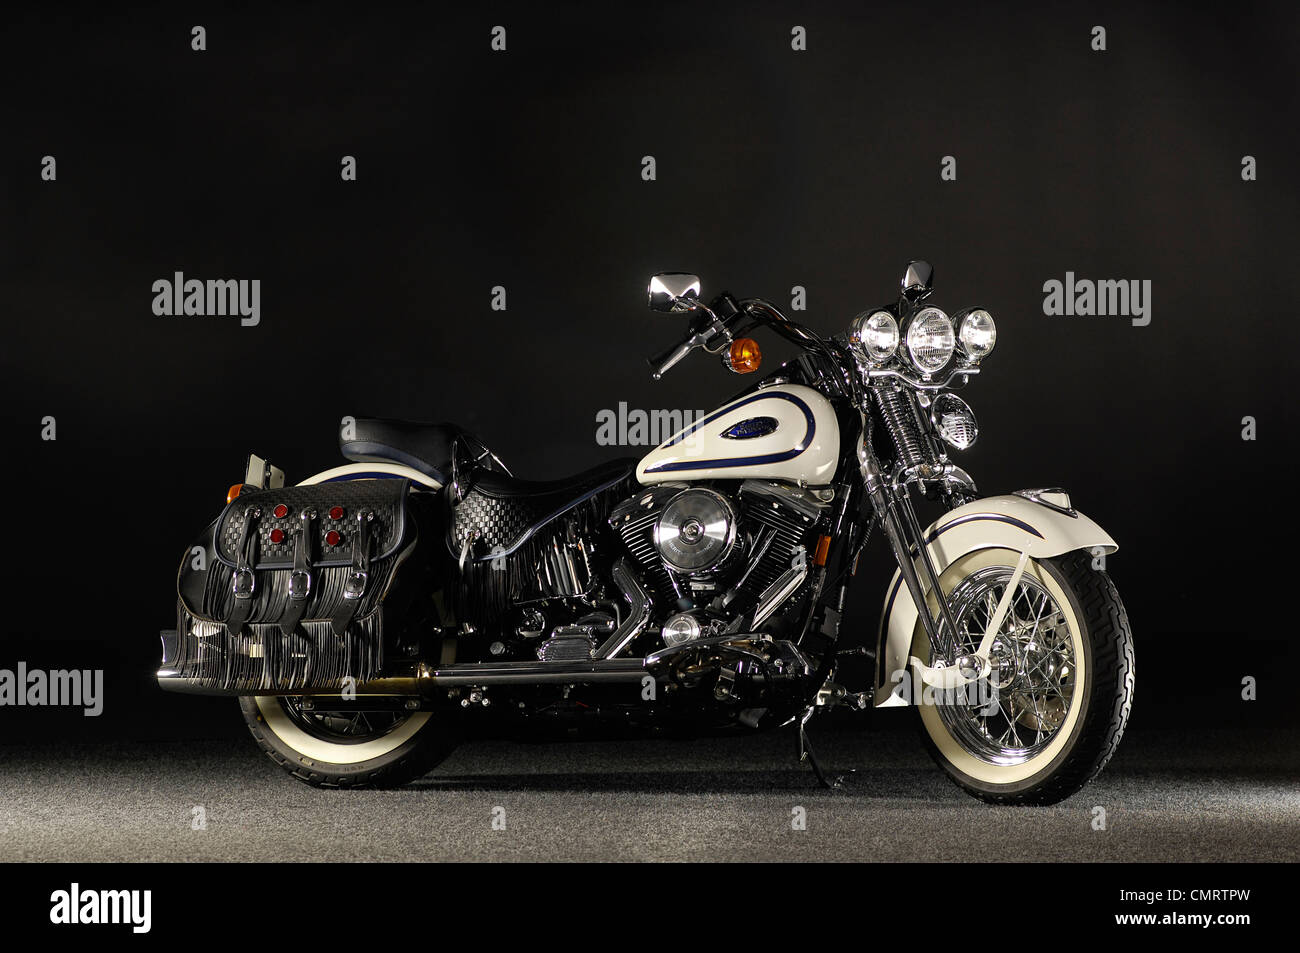 2005 Harley Davidson Soft tail Springer Stock Photo